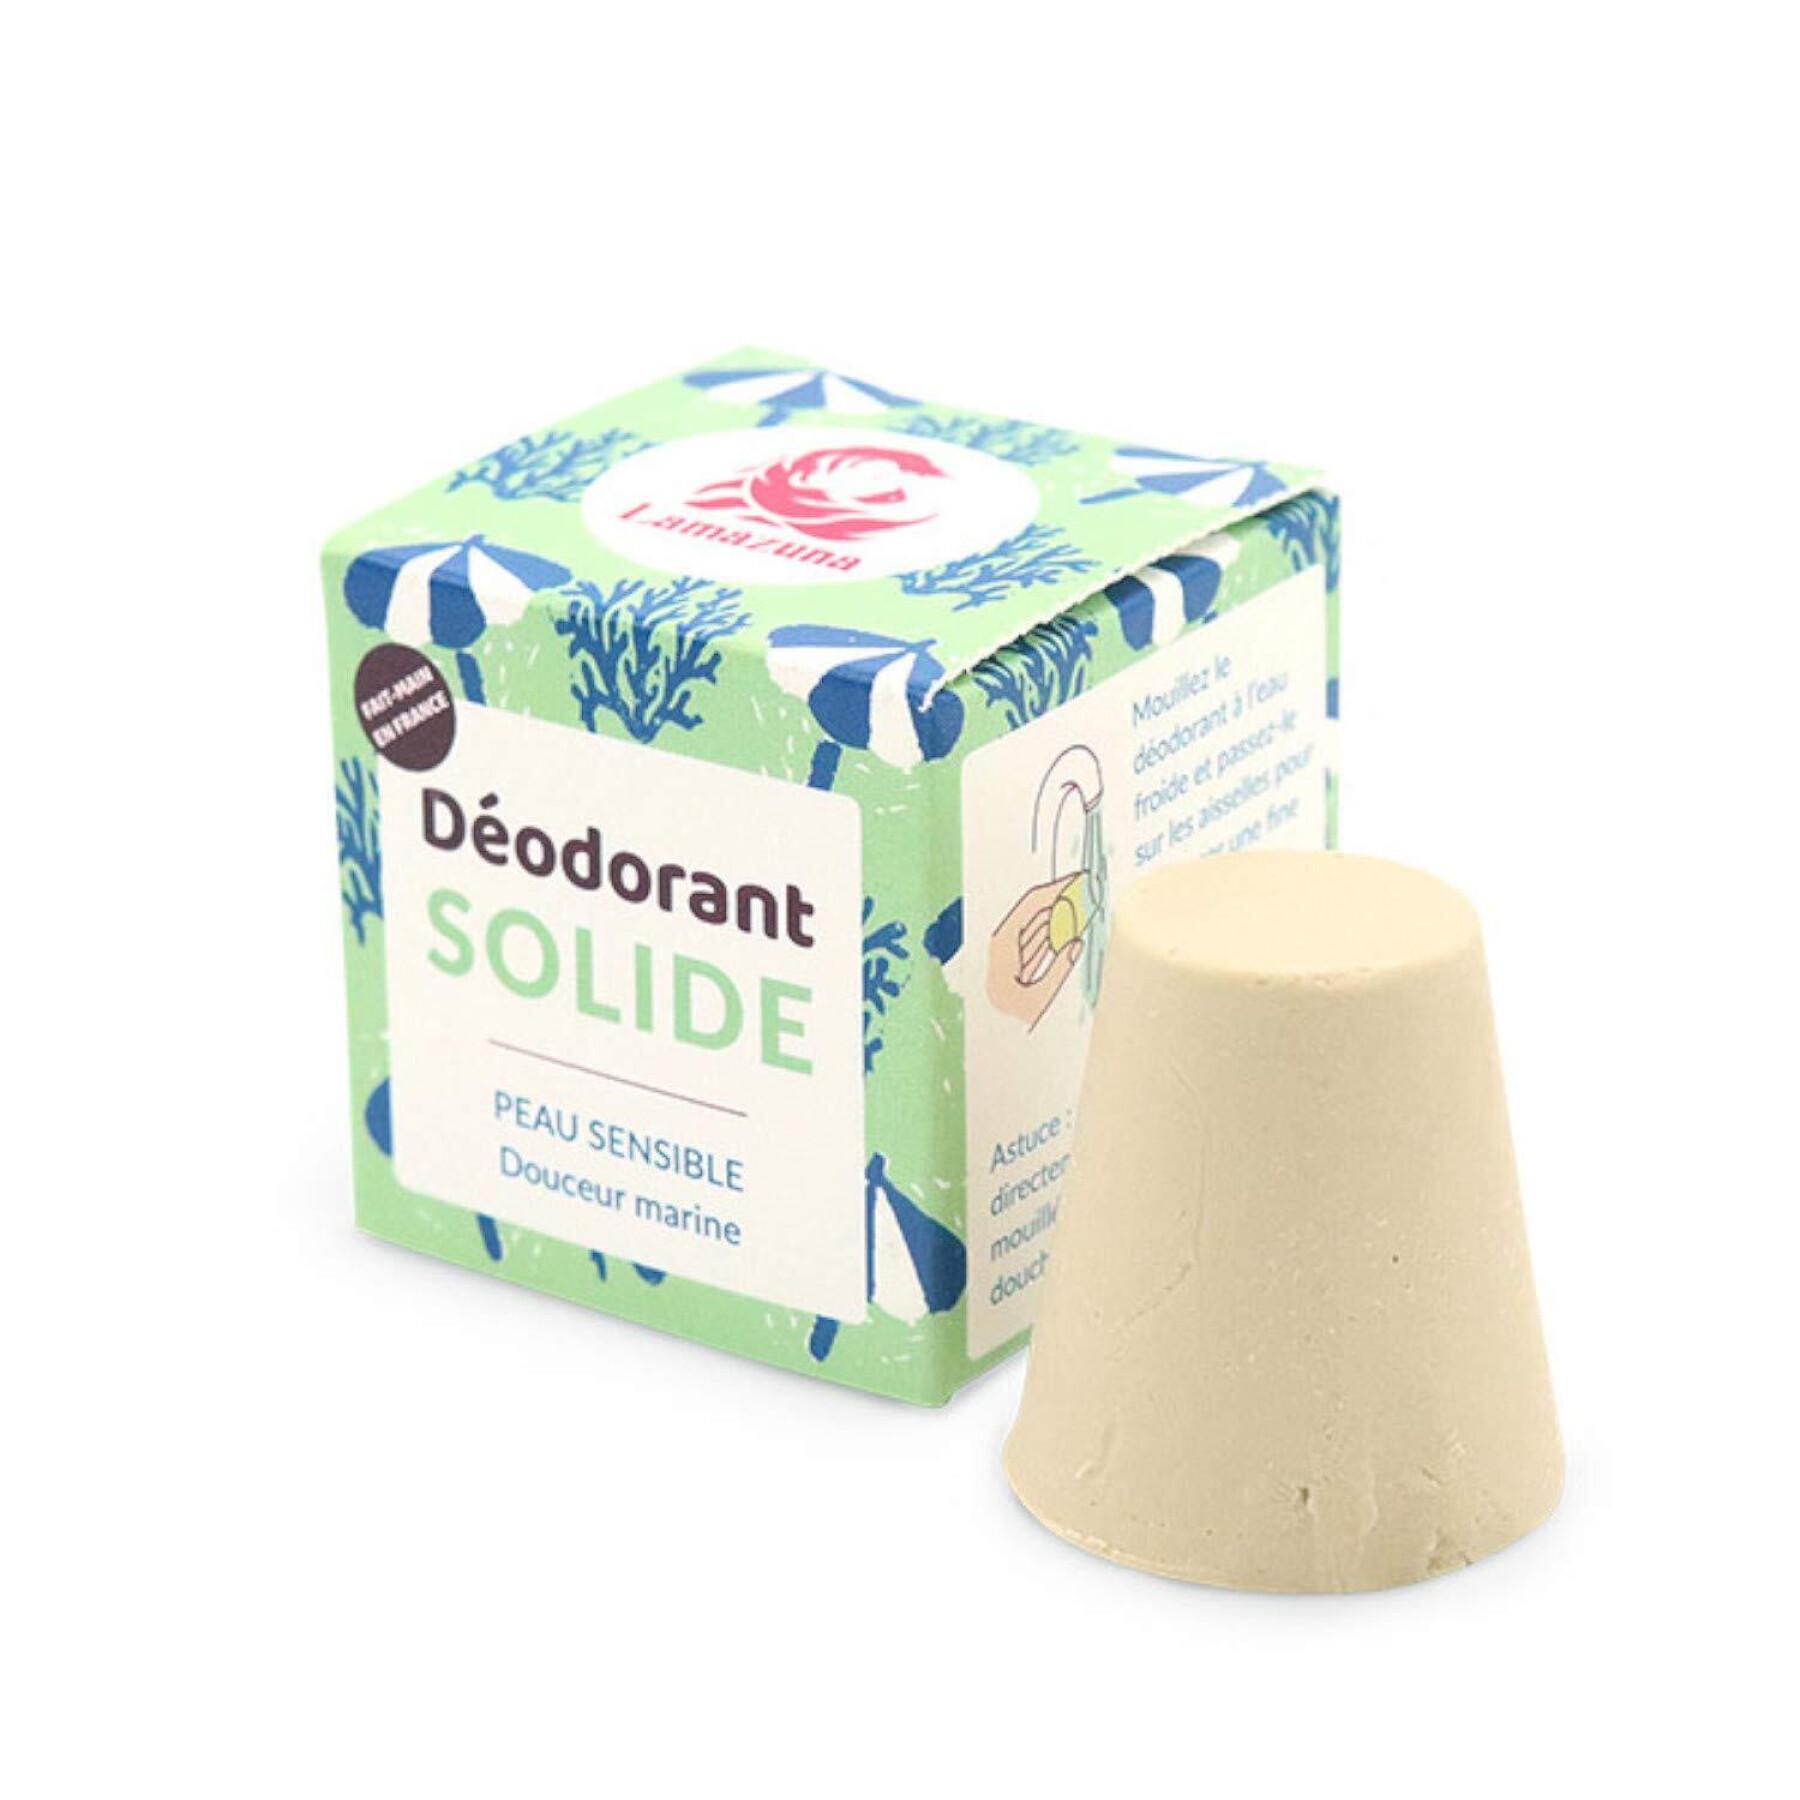 Vaste deodorant - mariene zachtheid - gevoelige huid Lamazuna (30 ml)